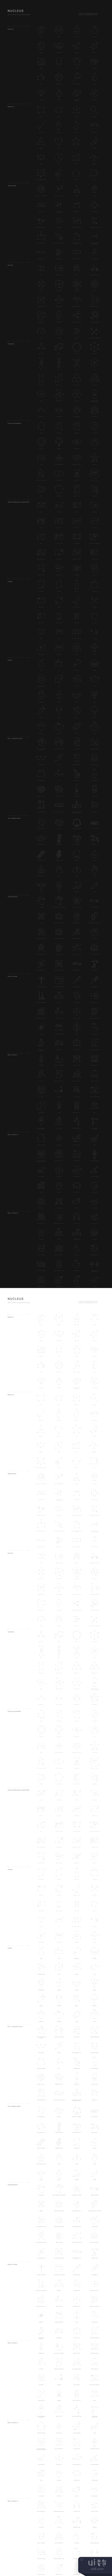 核子图标集 (Nucleus Icon Set)插图1